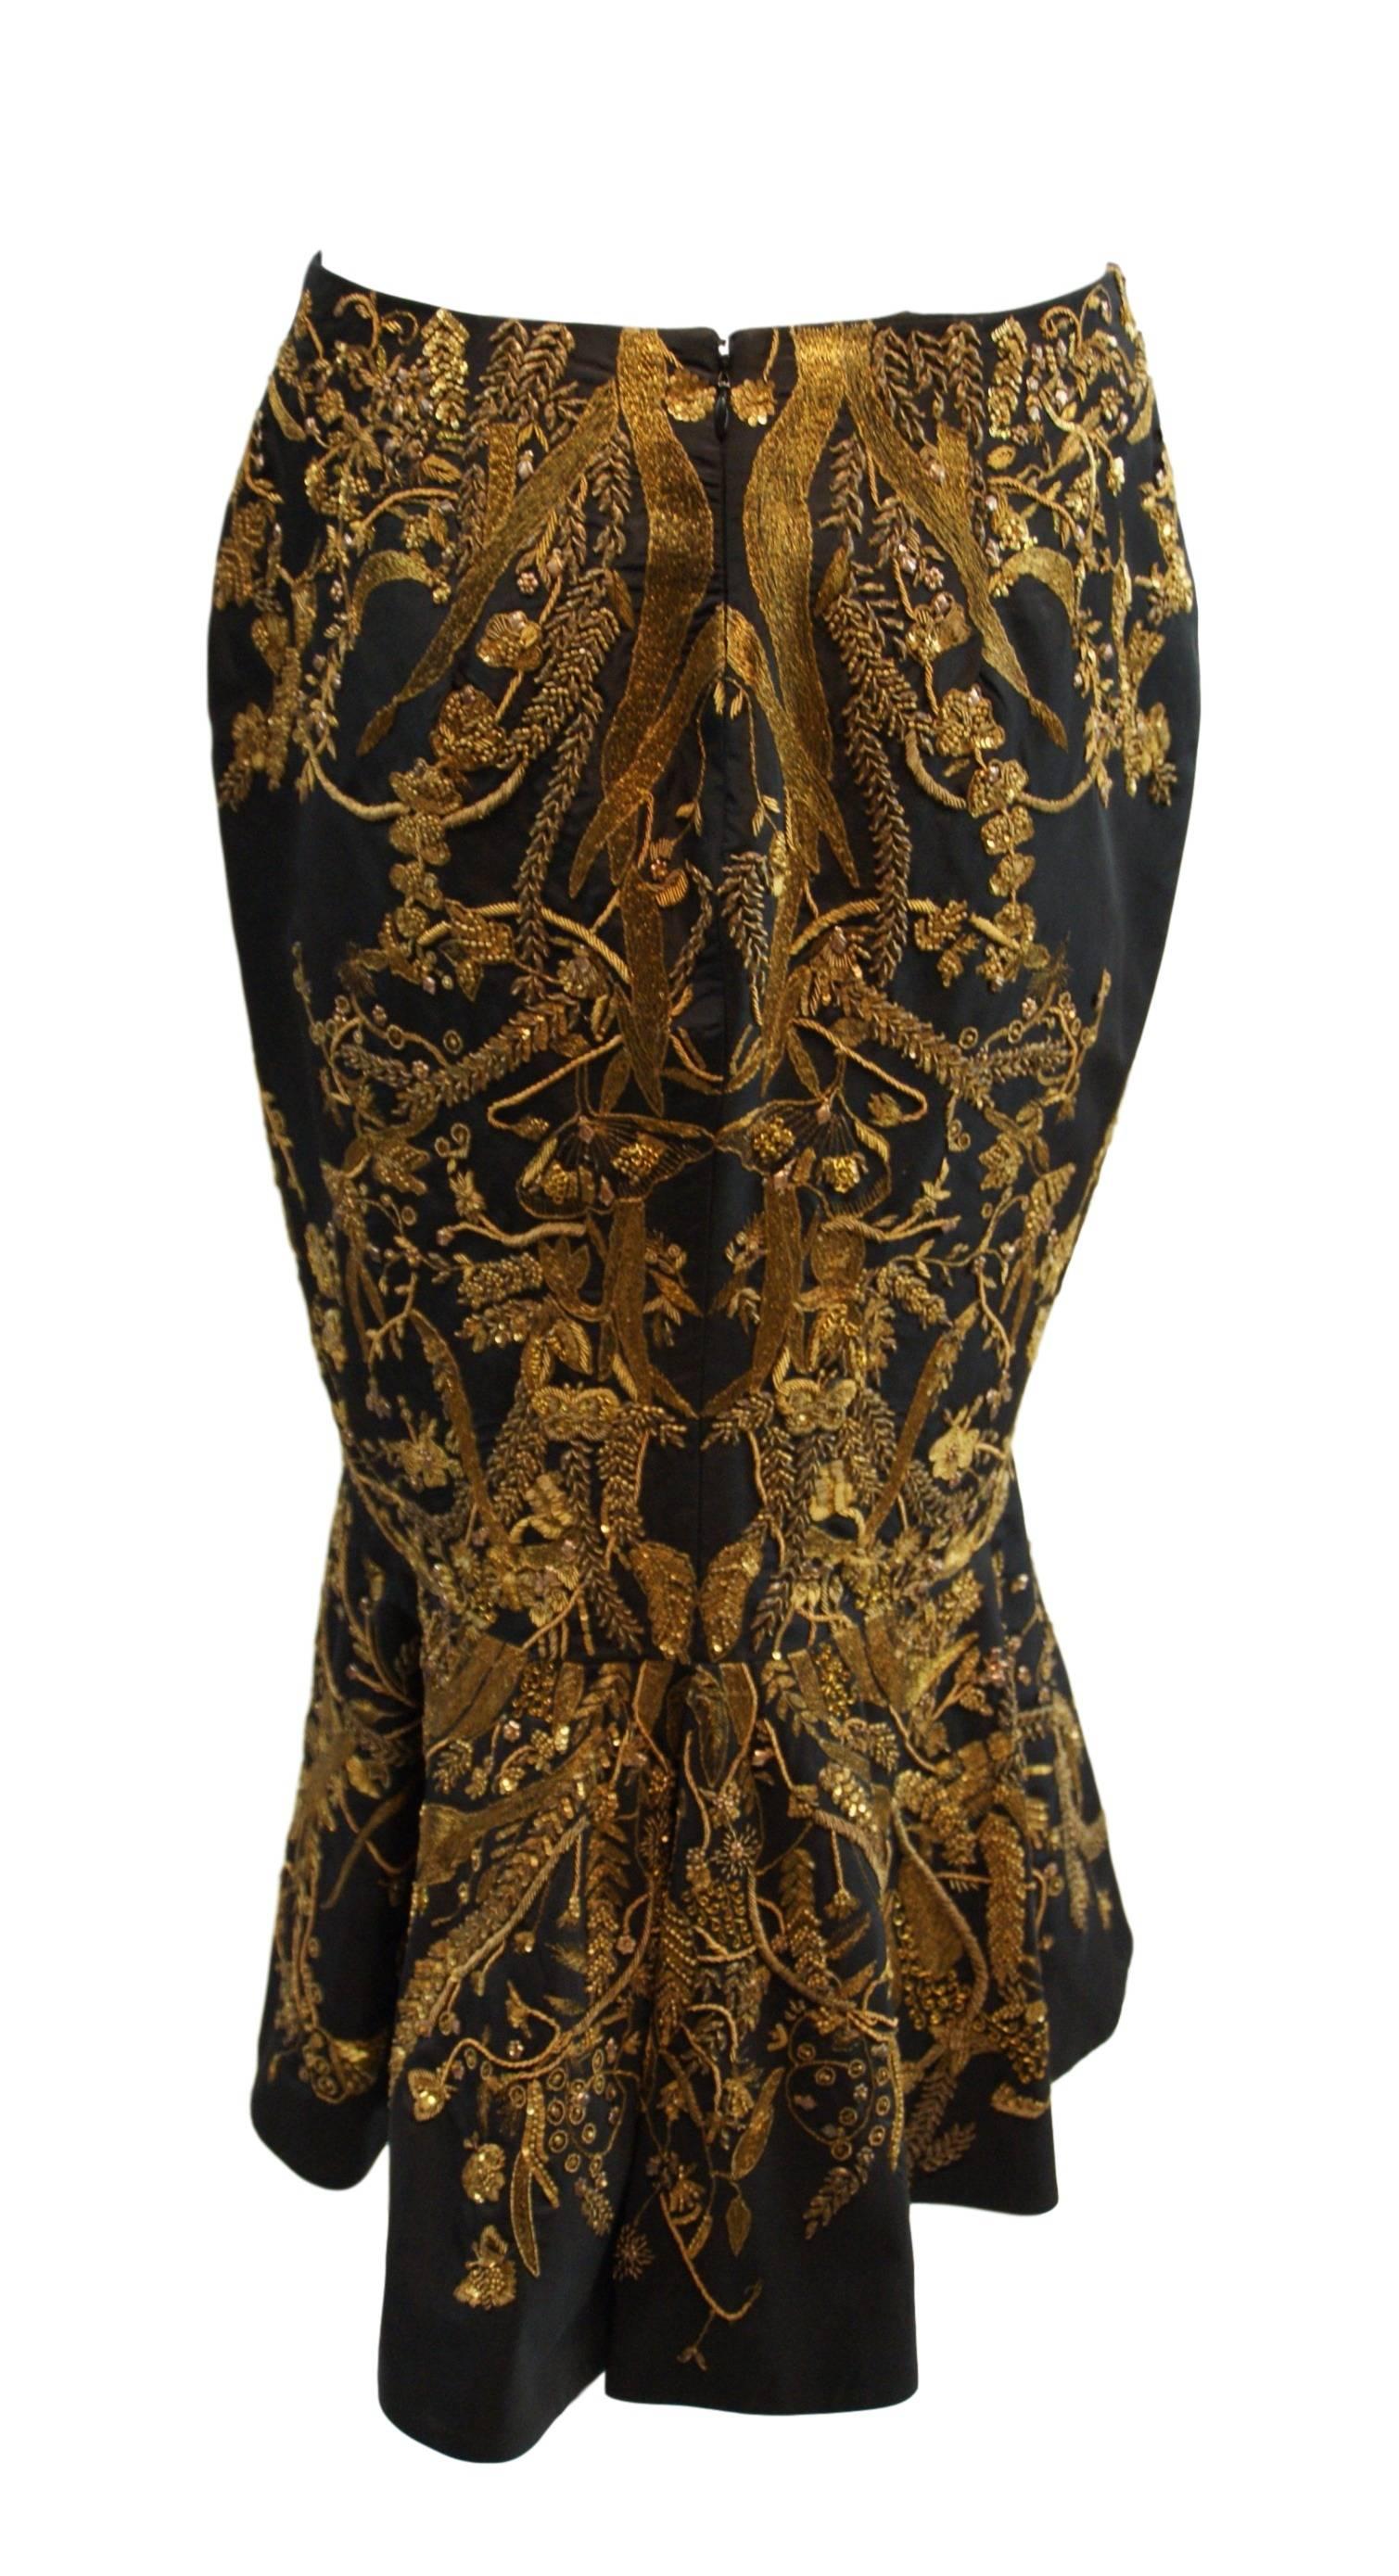 Alexander McQueen Resort 2012 Chinese Embroidered Bead Jacket Skirt Suit  1